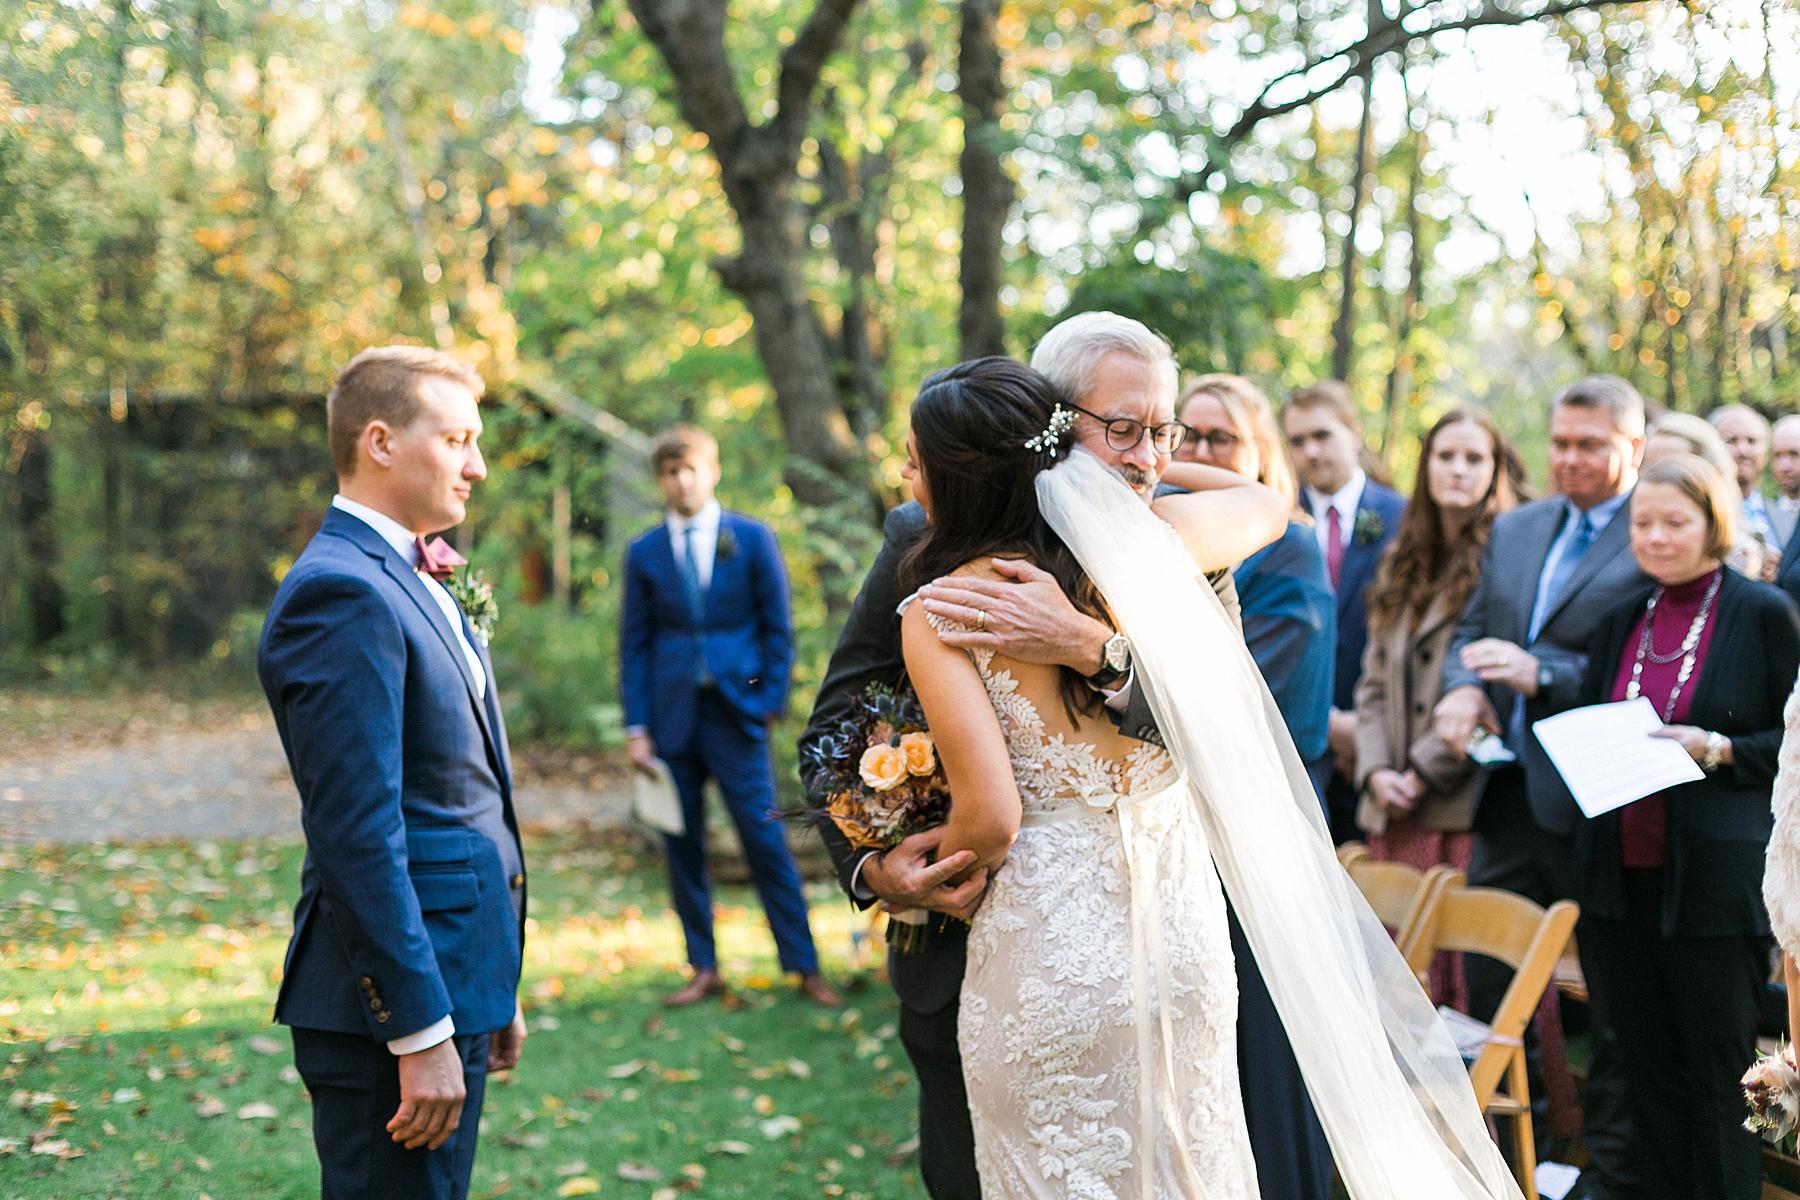 fall outdoor wedding ceremony at schlitz audubon nature center in milwaukee, wi